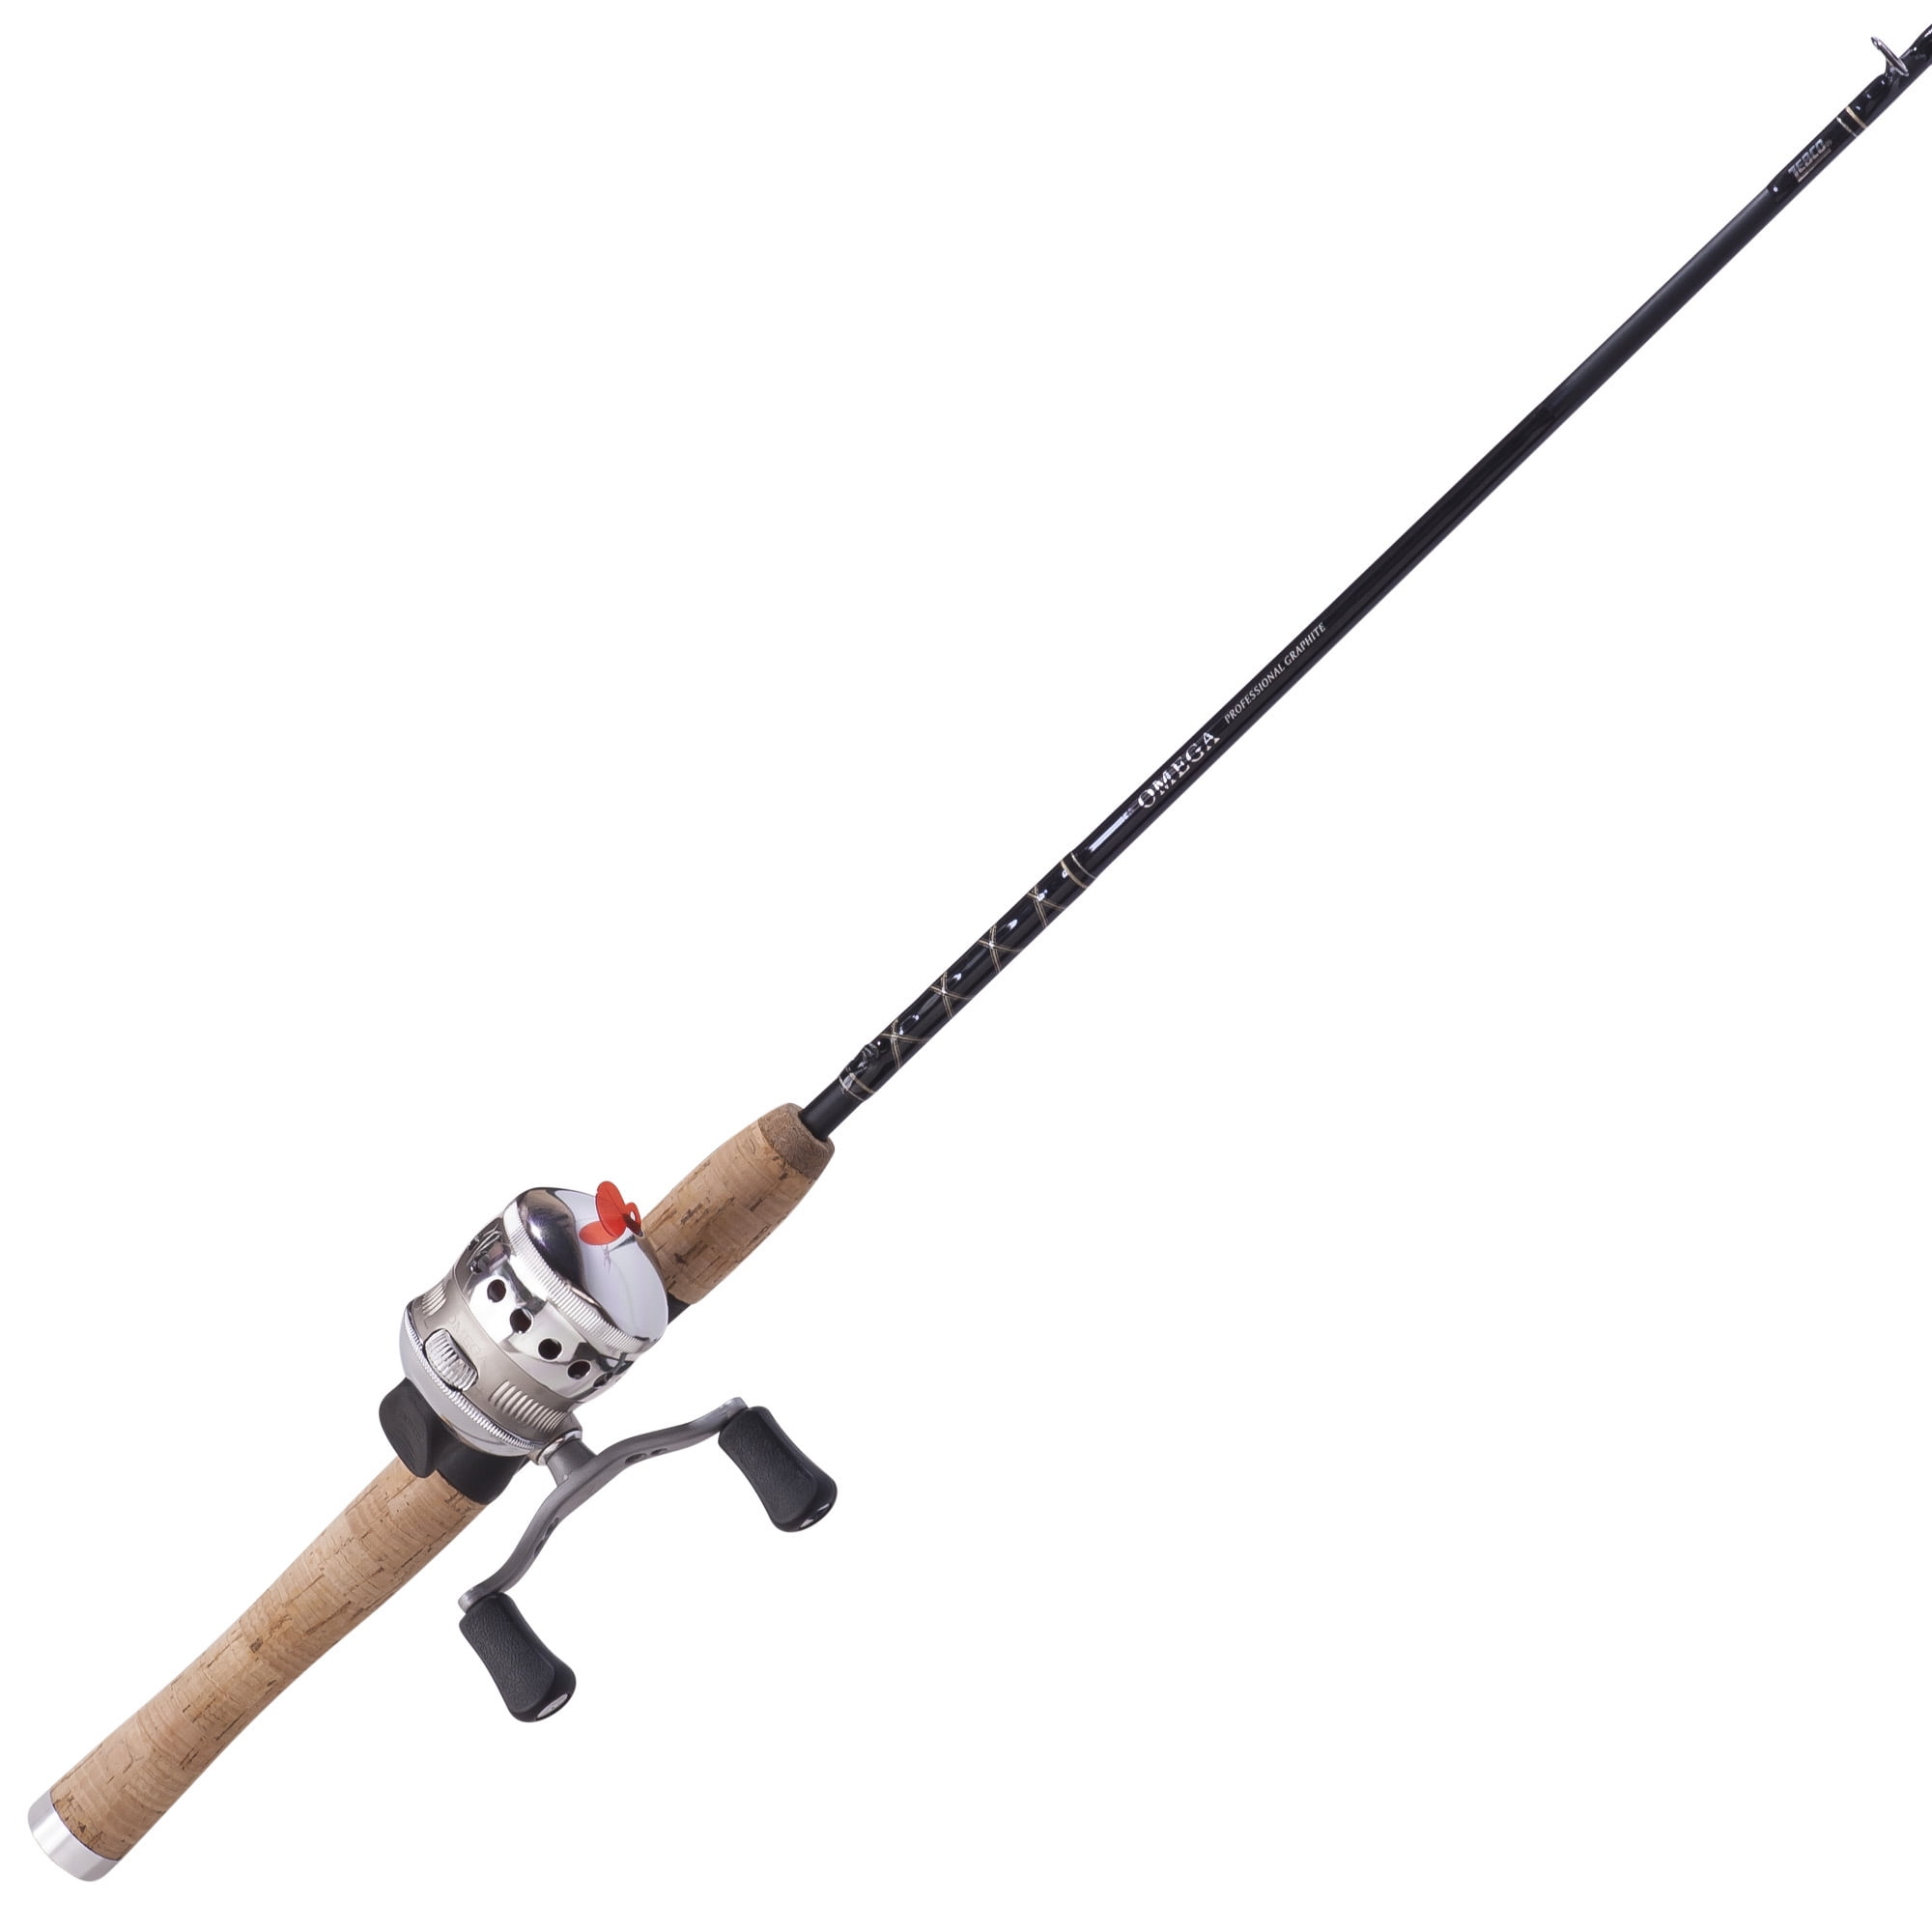 ZEBCO FIBERGLASS SPINNING Model 4470-6' Fishing Rod Medium Action